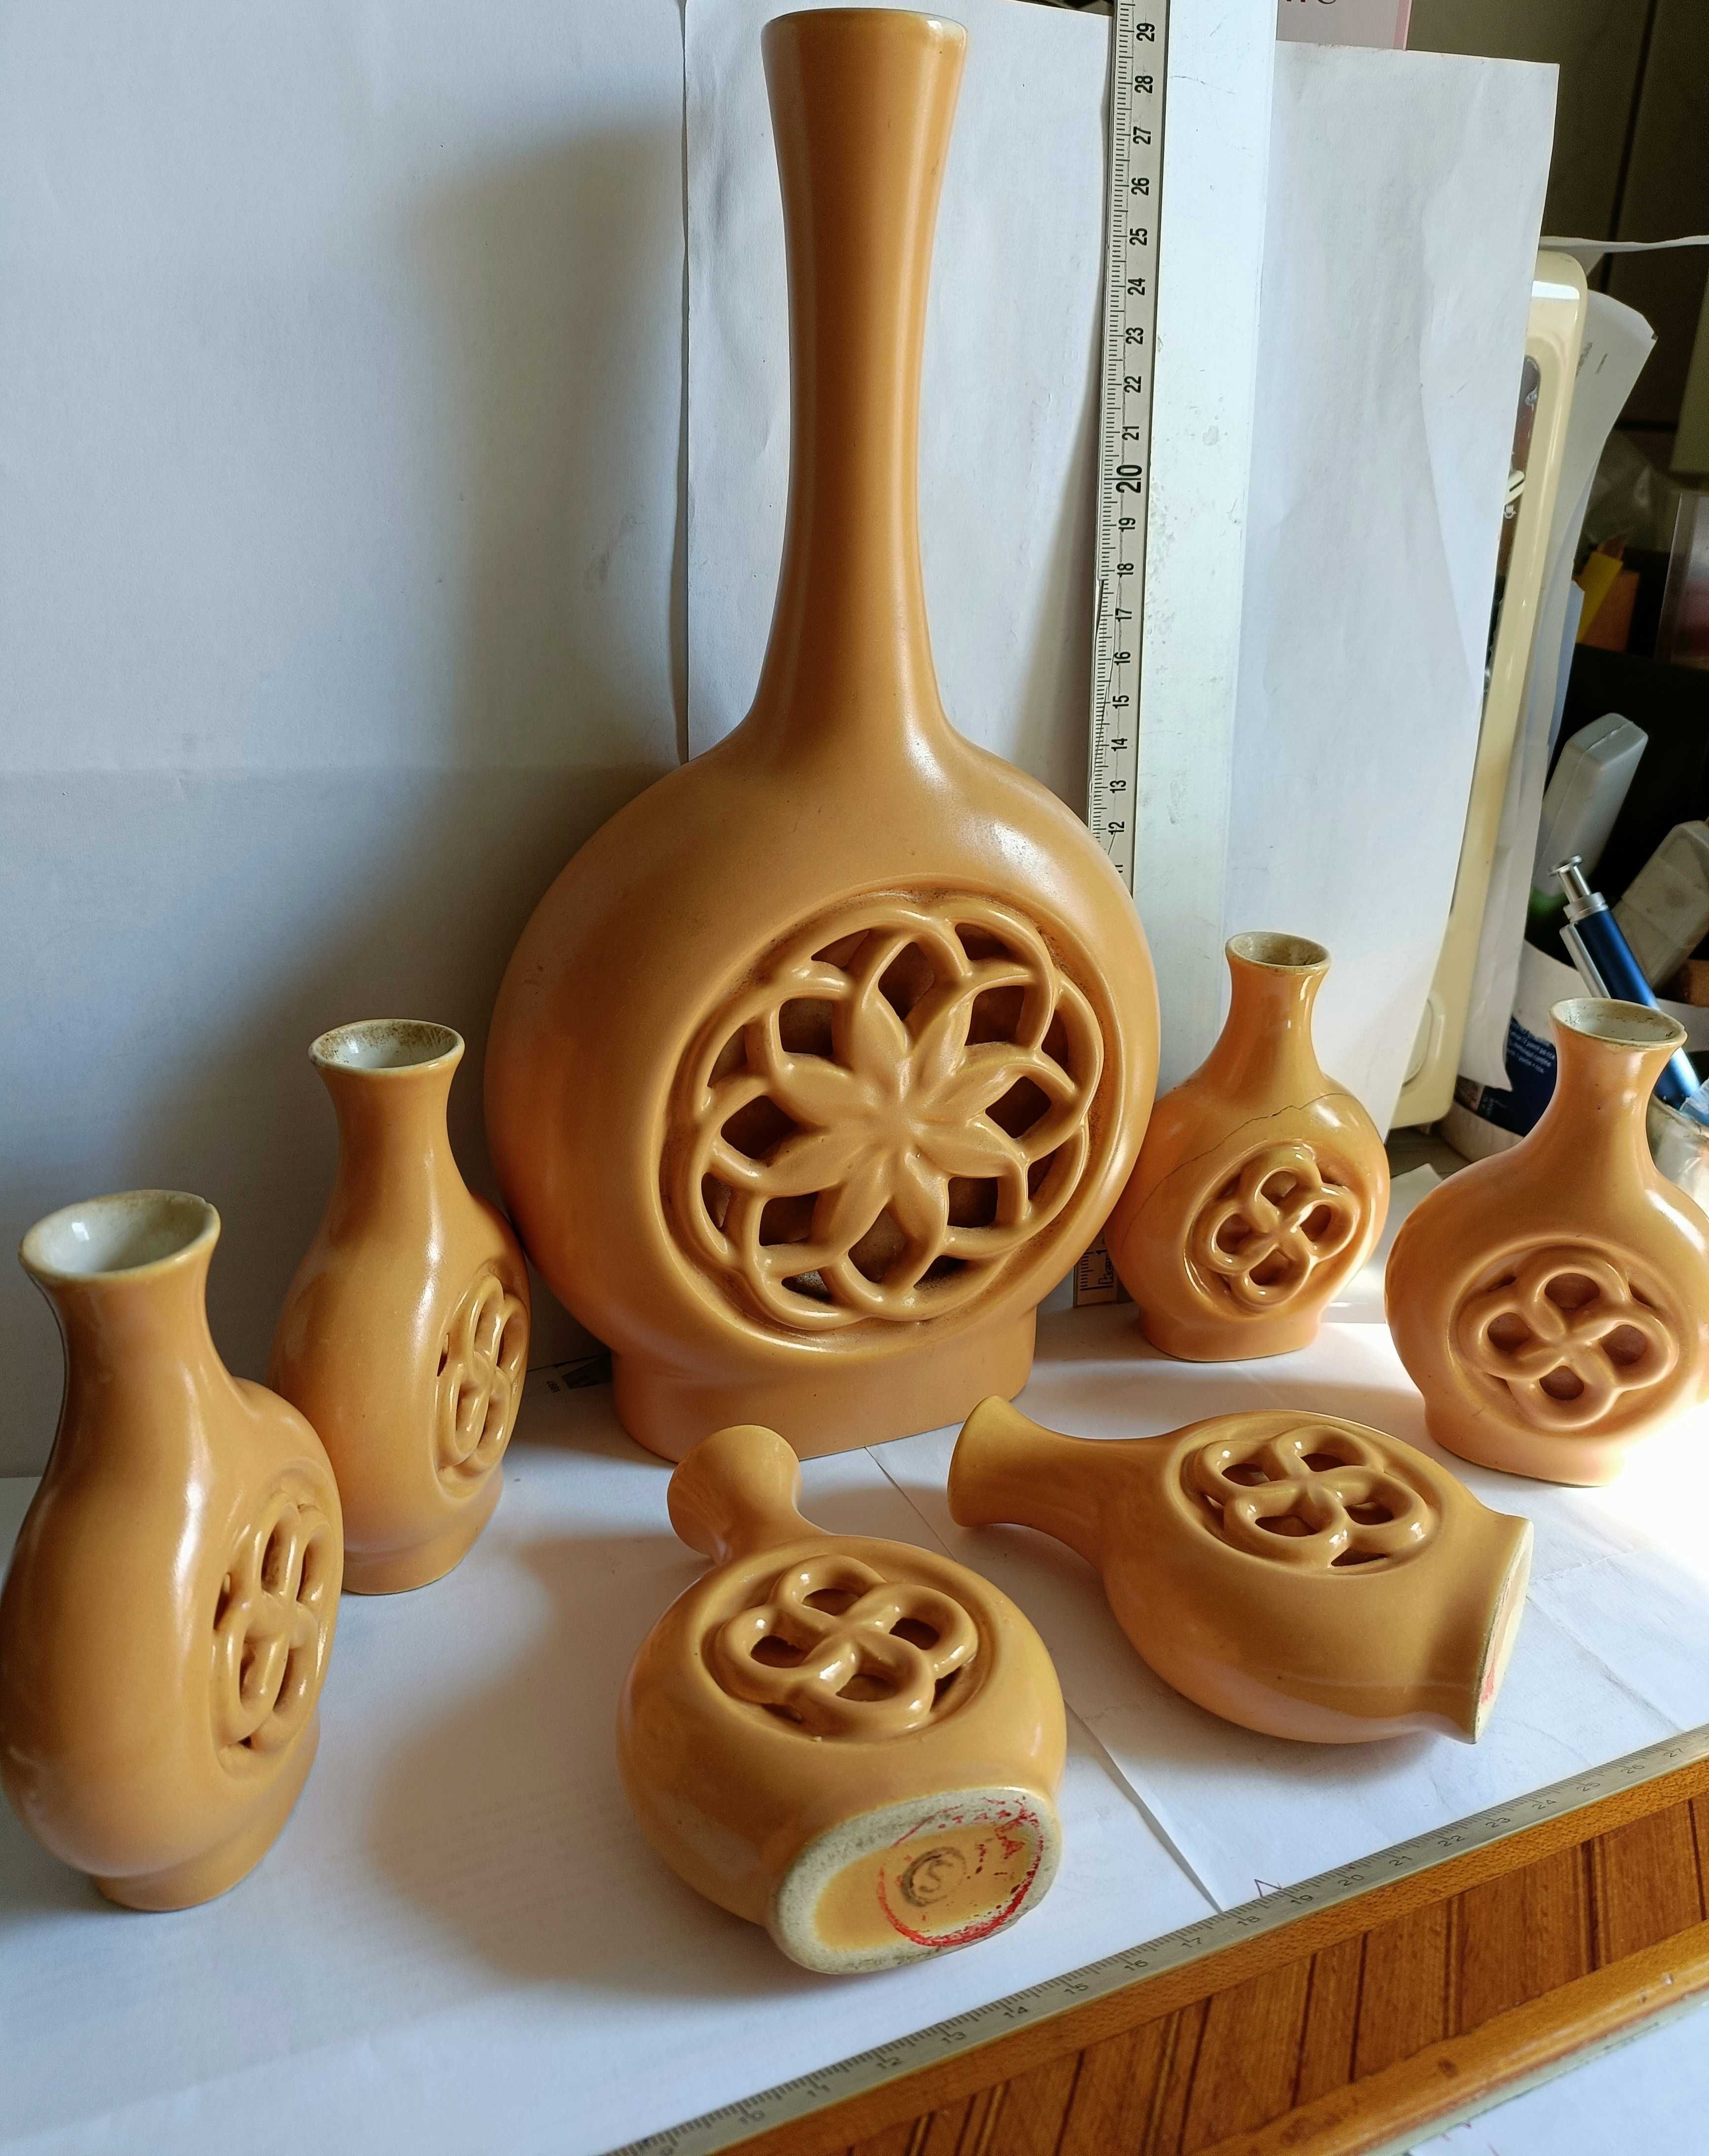 Servici ceramic romanesc retro